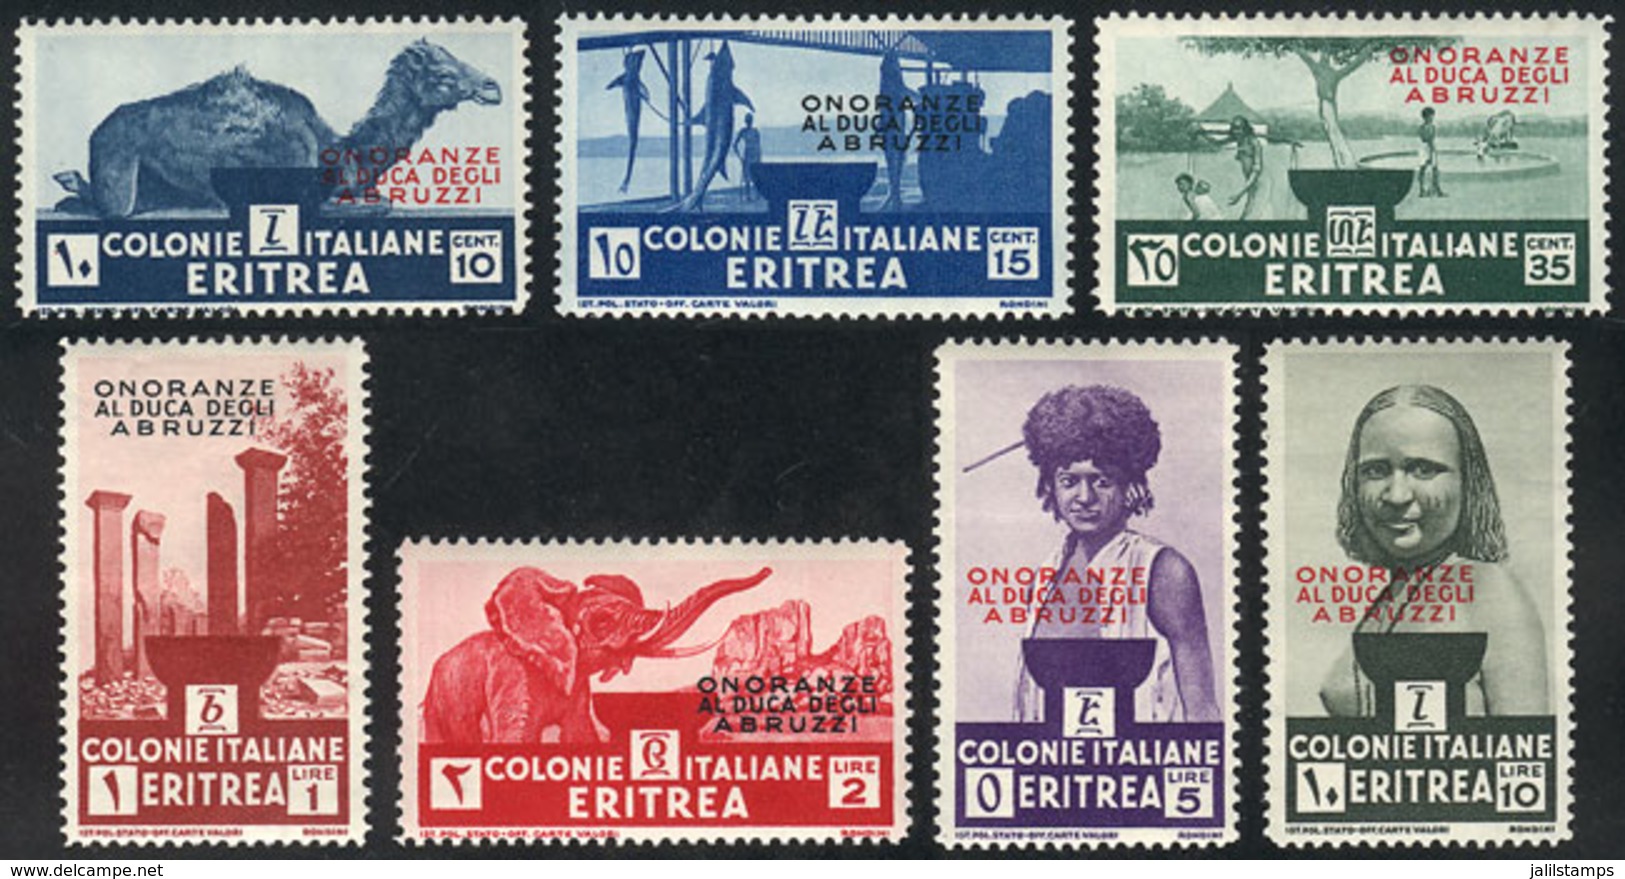 ERITREA: Sc.168/174, 1934 Abruzzi Issue, Cmpl. Set Of 7 Values, Mint Lightly Hinged, VF Quality! - Eritrea